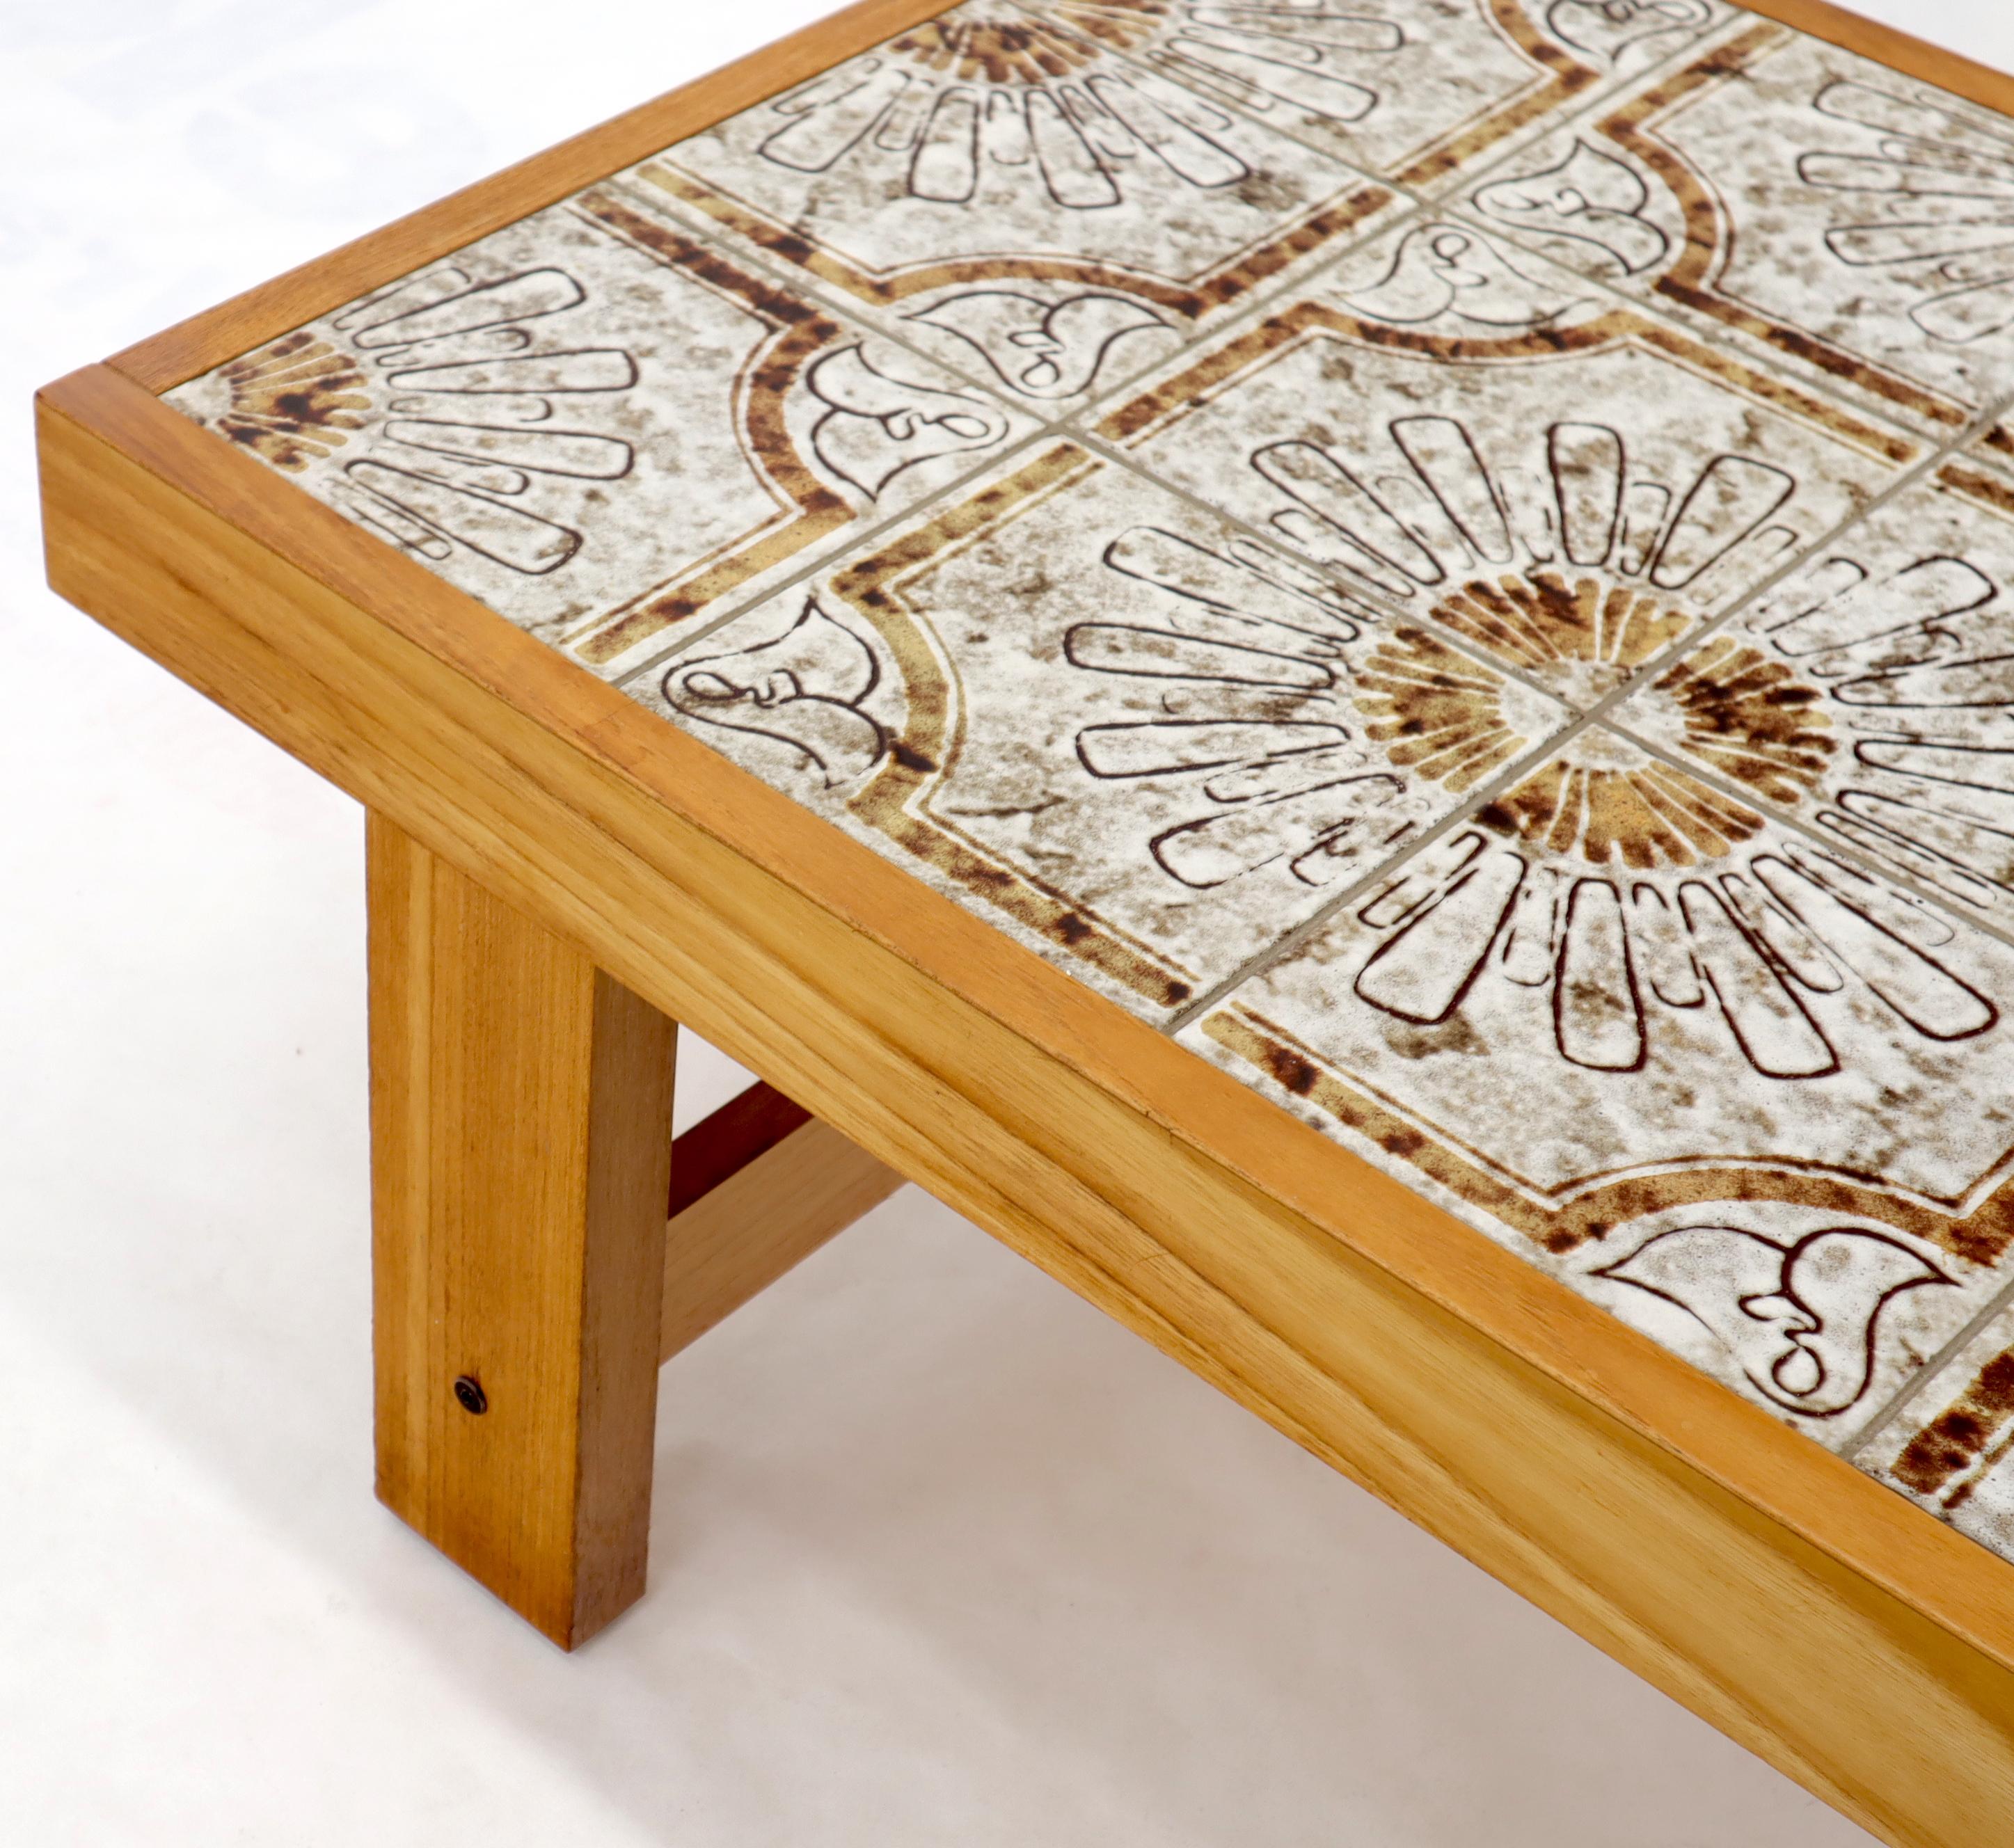 20th Century Art Tile and Teak Rectangular Danish Mid-Century Modern Coffee Table